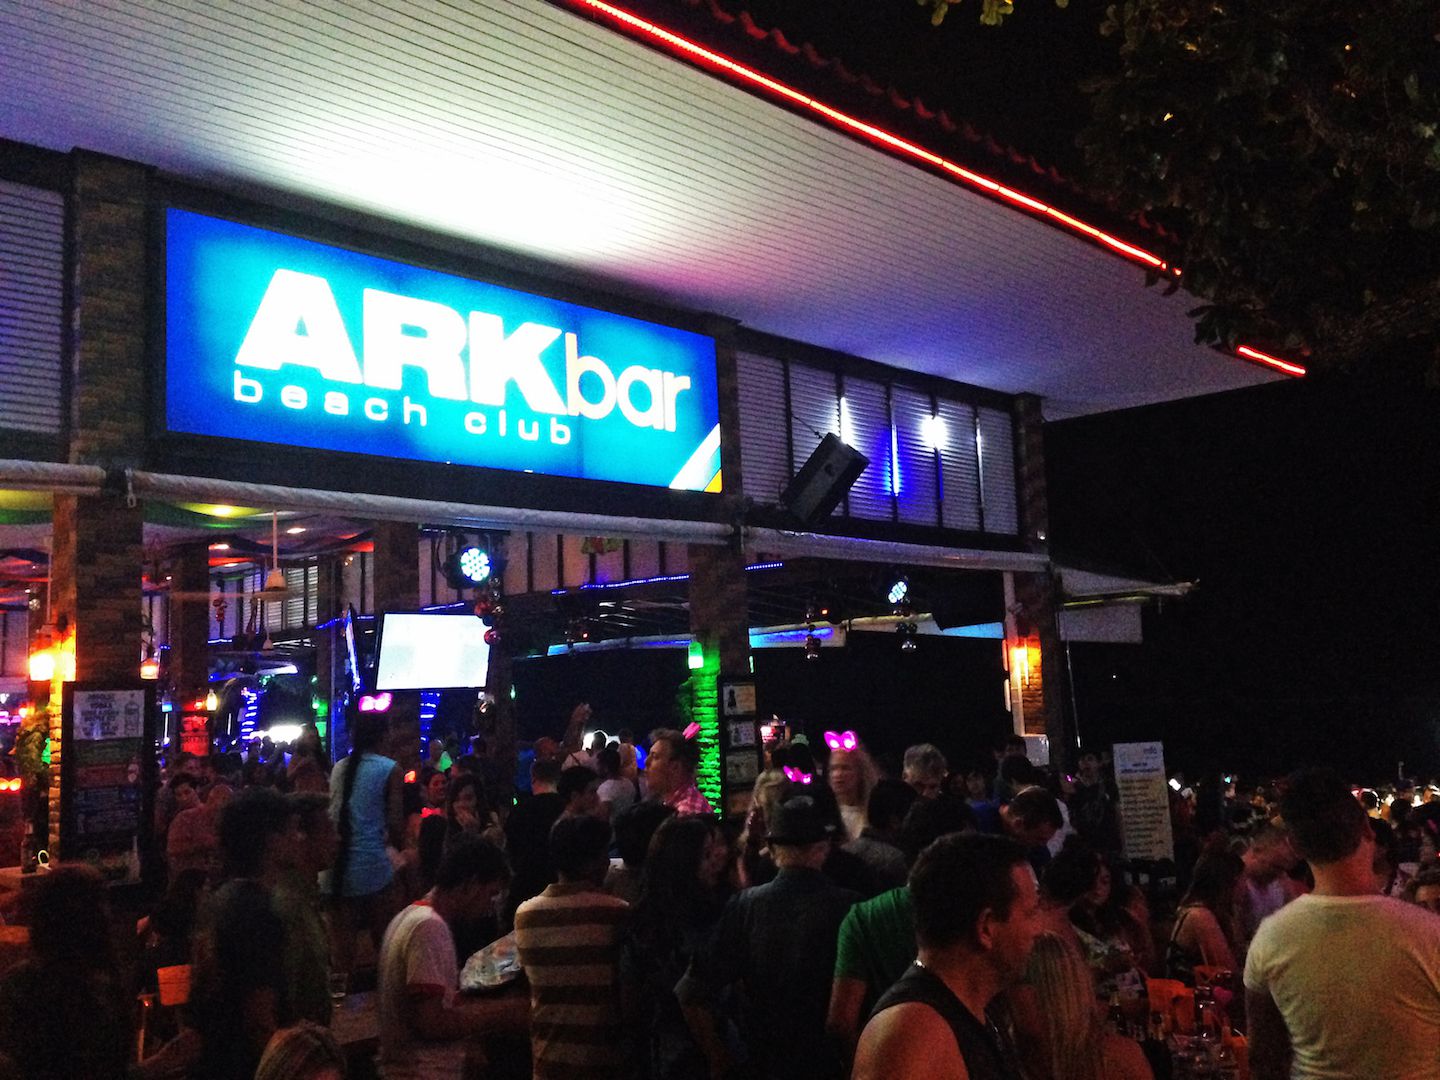 Ark bar was a blast to welcome 2015, Koh Samui, Thailand